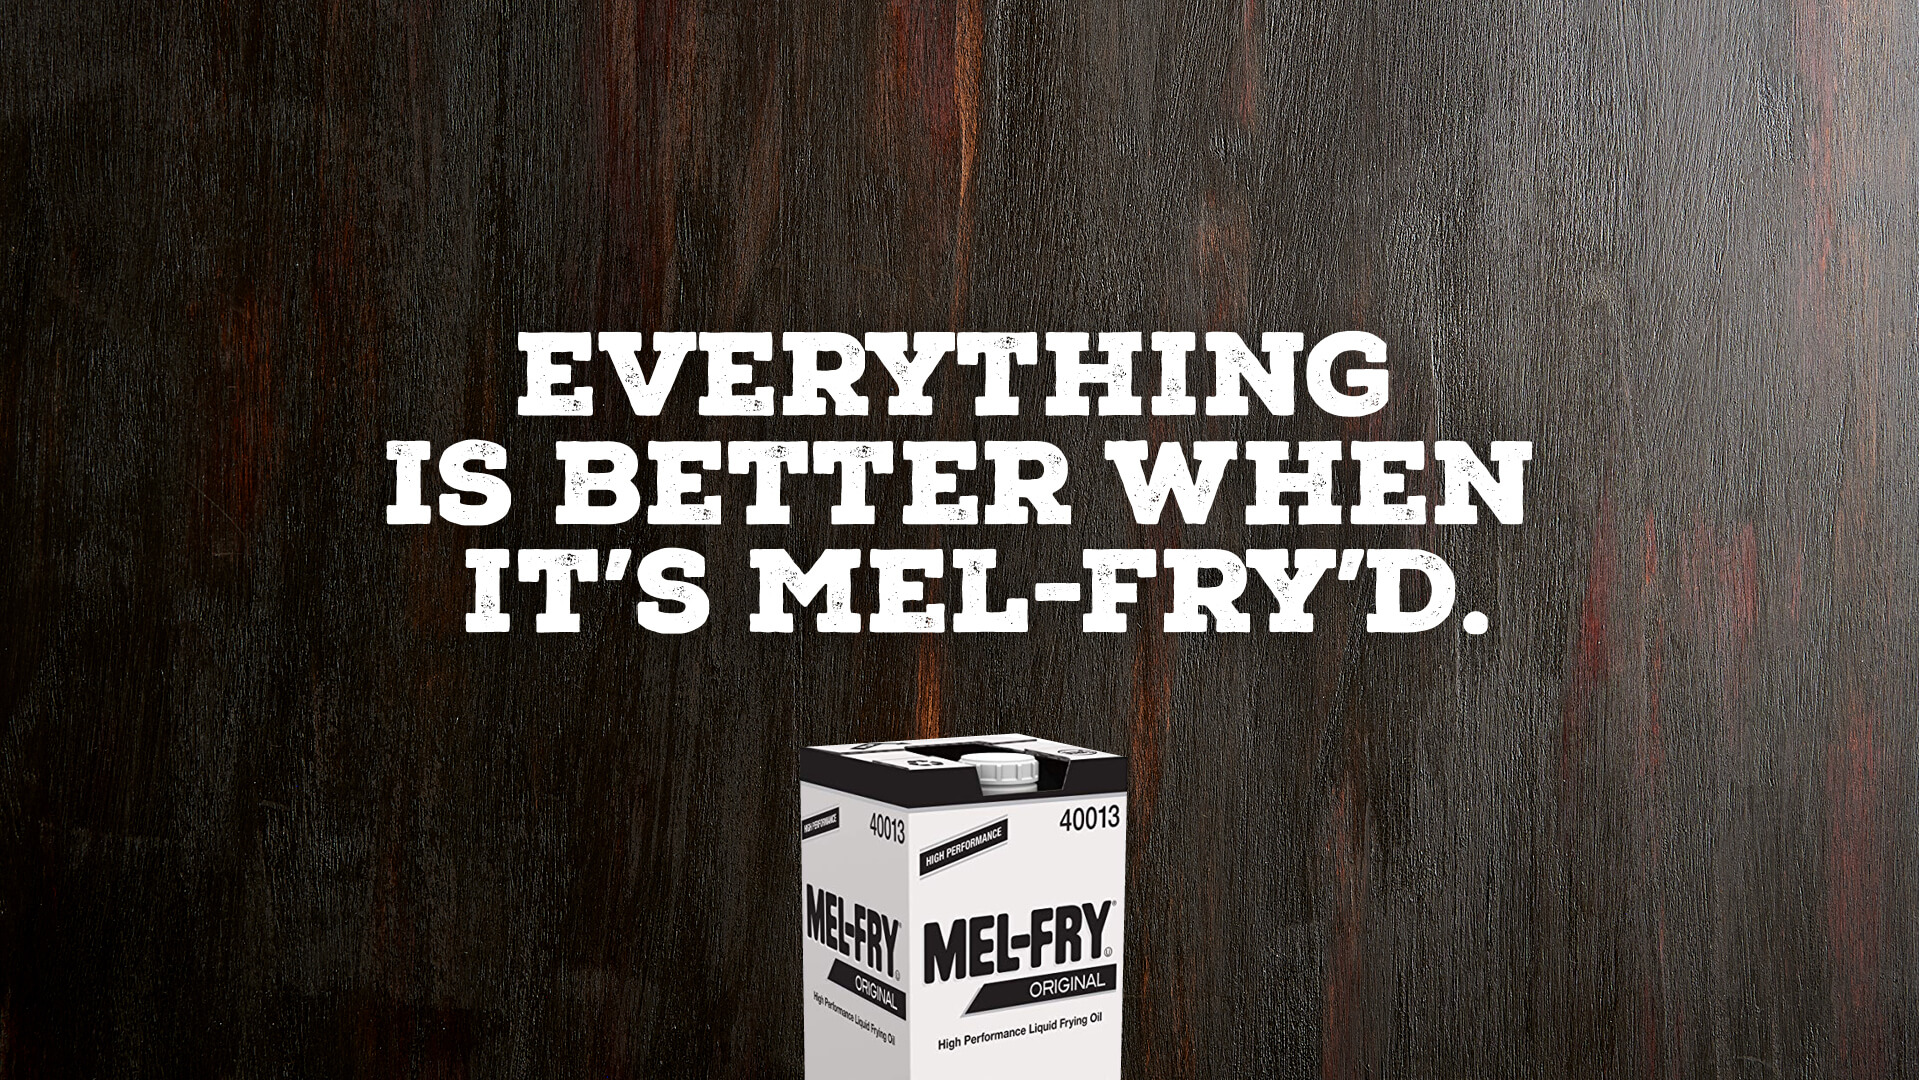 Ventura Mel-Fry Everything is better when it’s Mel-Fry’d